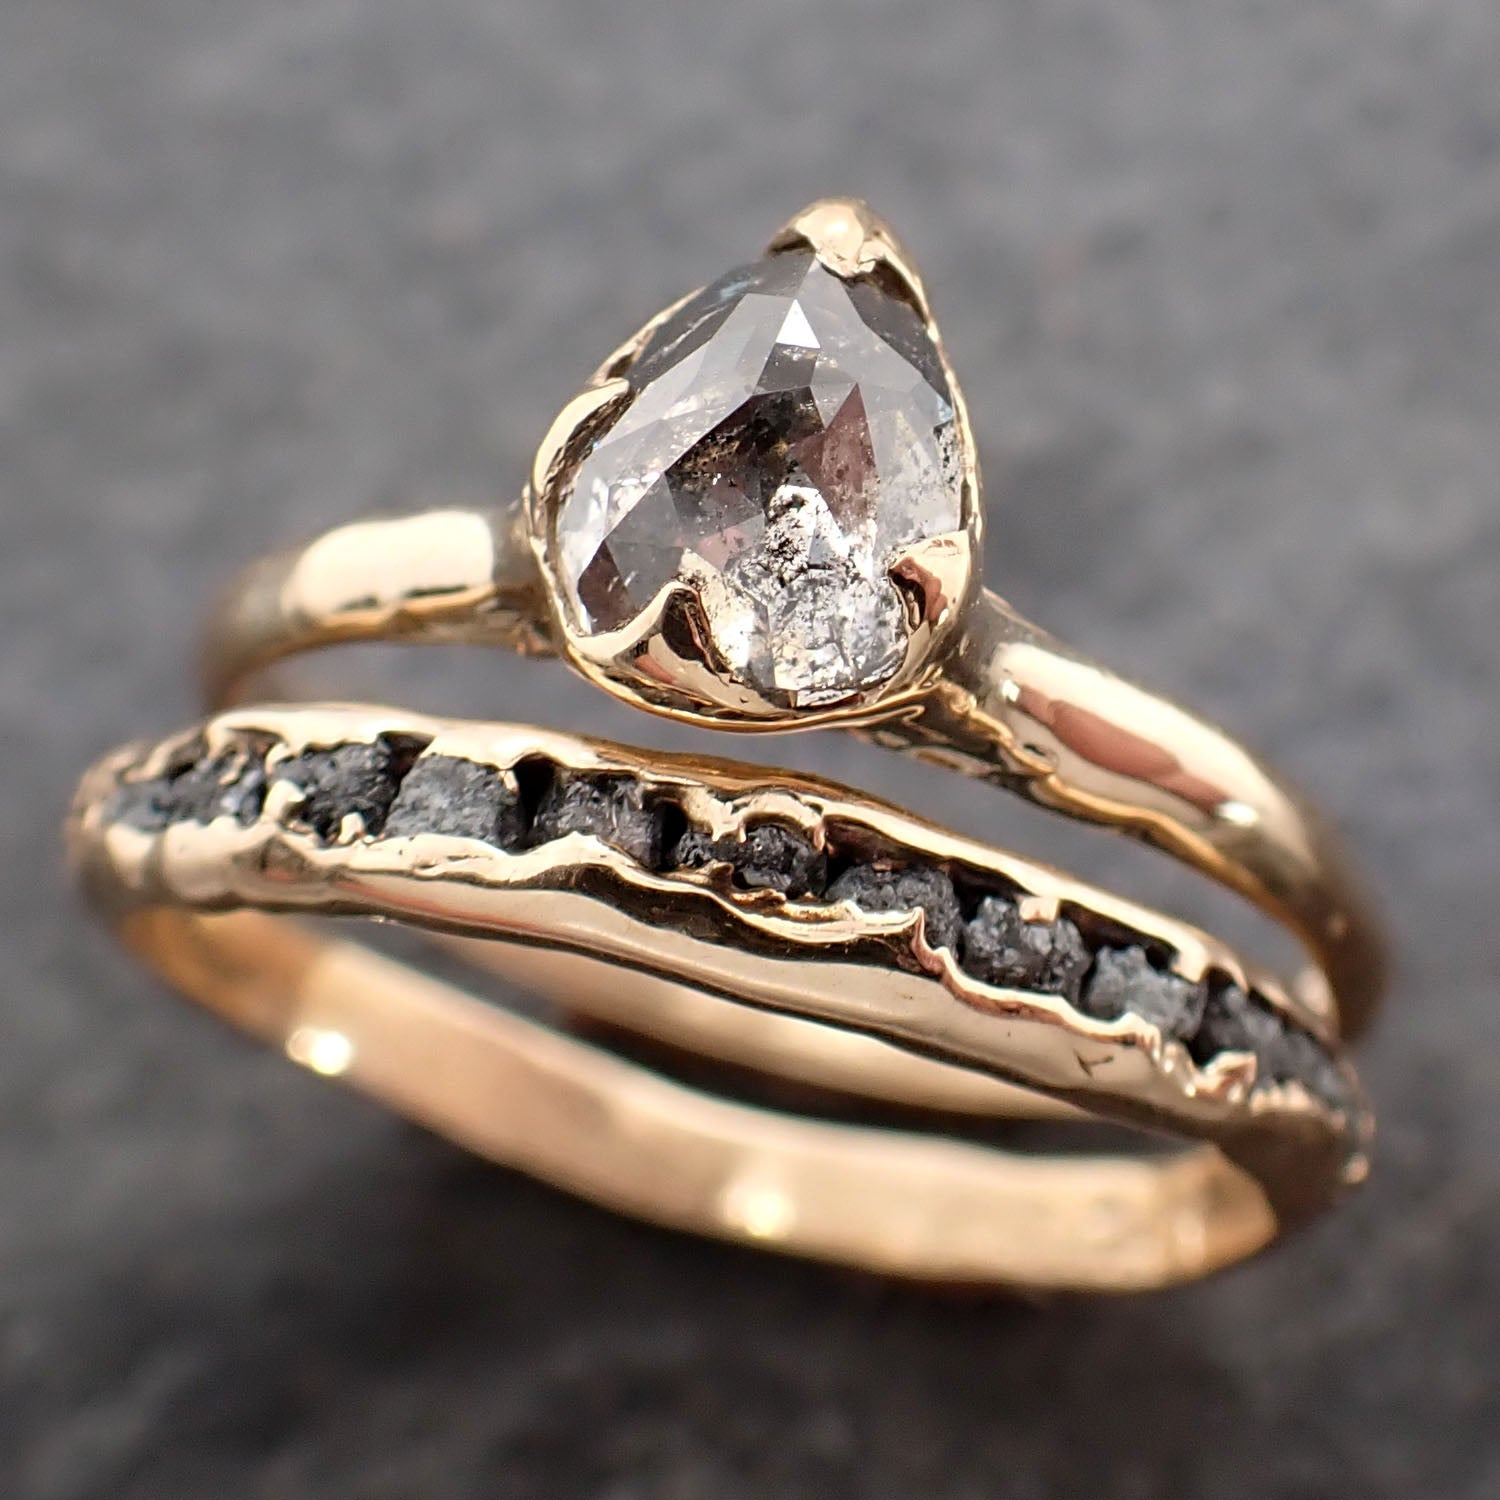 Fancy cut salt and pepper Diamond Solitaire Engagement 14k yellow Gold Wedding Ring Diamond Ring byAngeline 2613